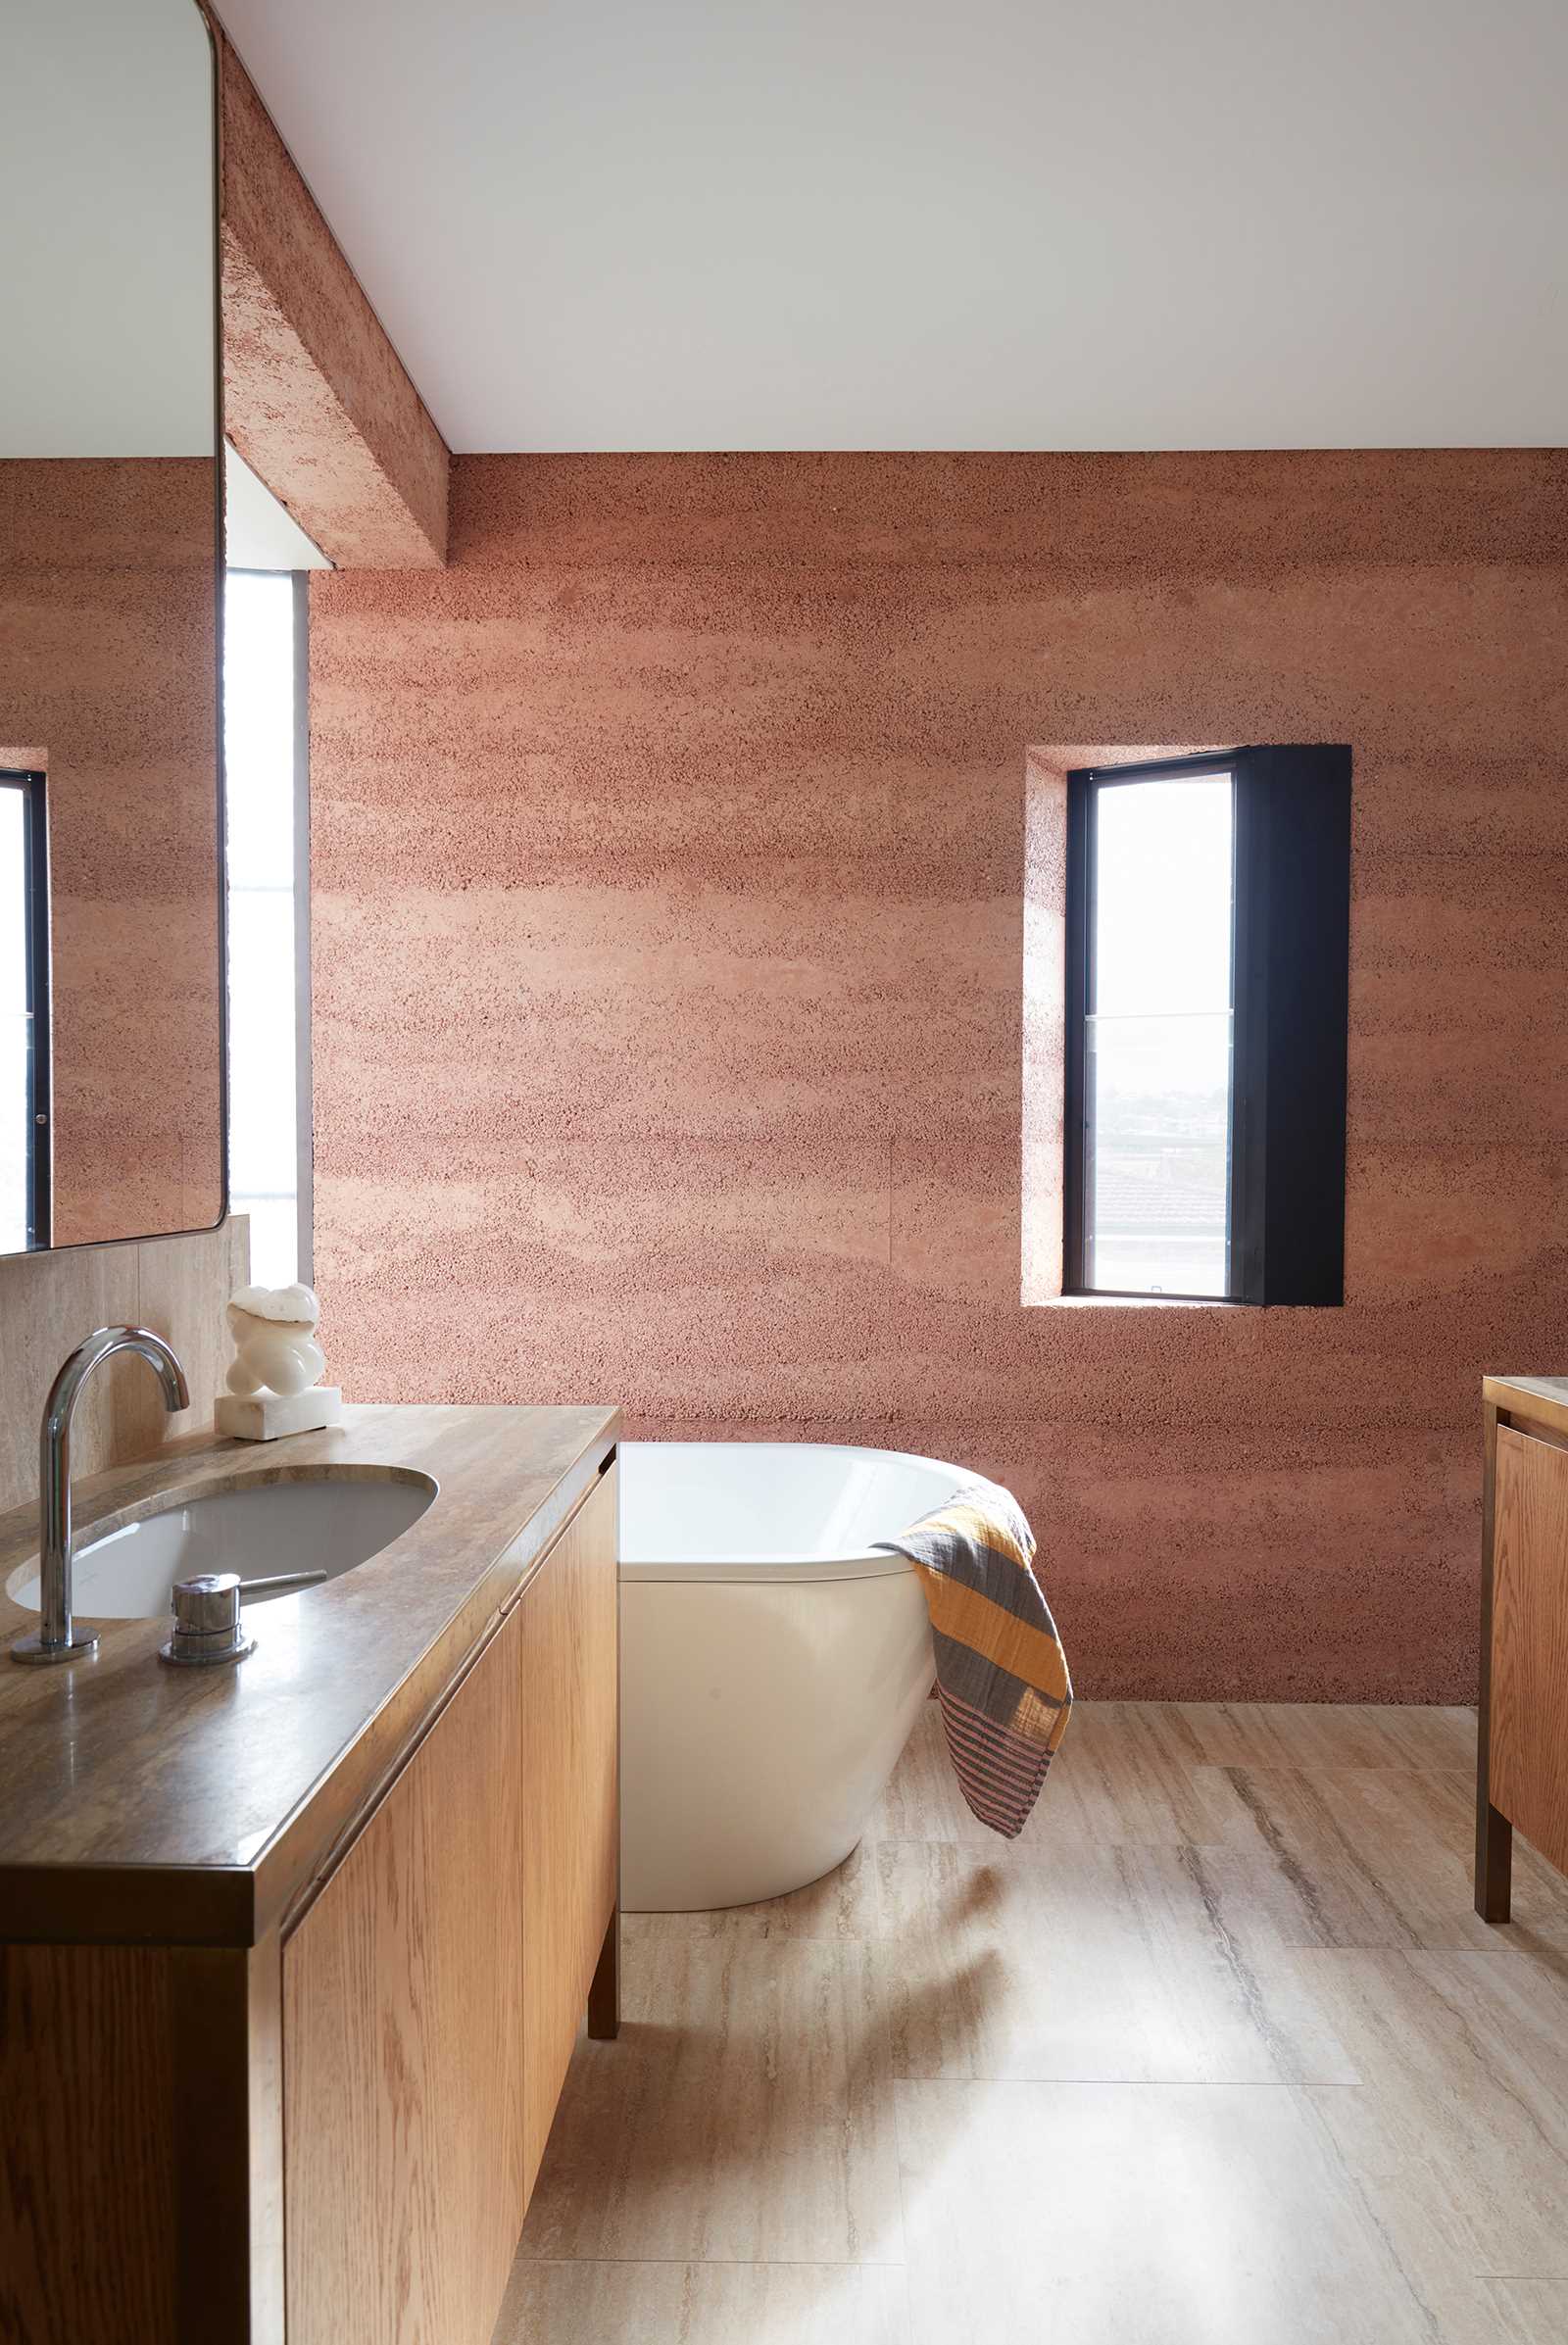 A modern bathroom with rammed earth walls.